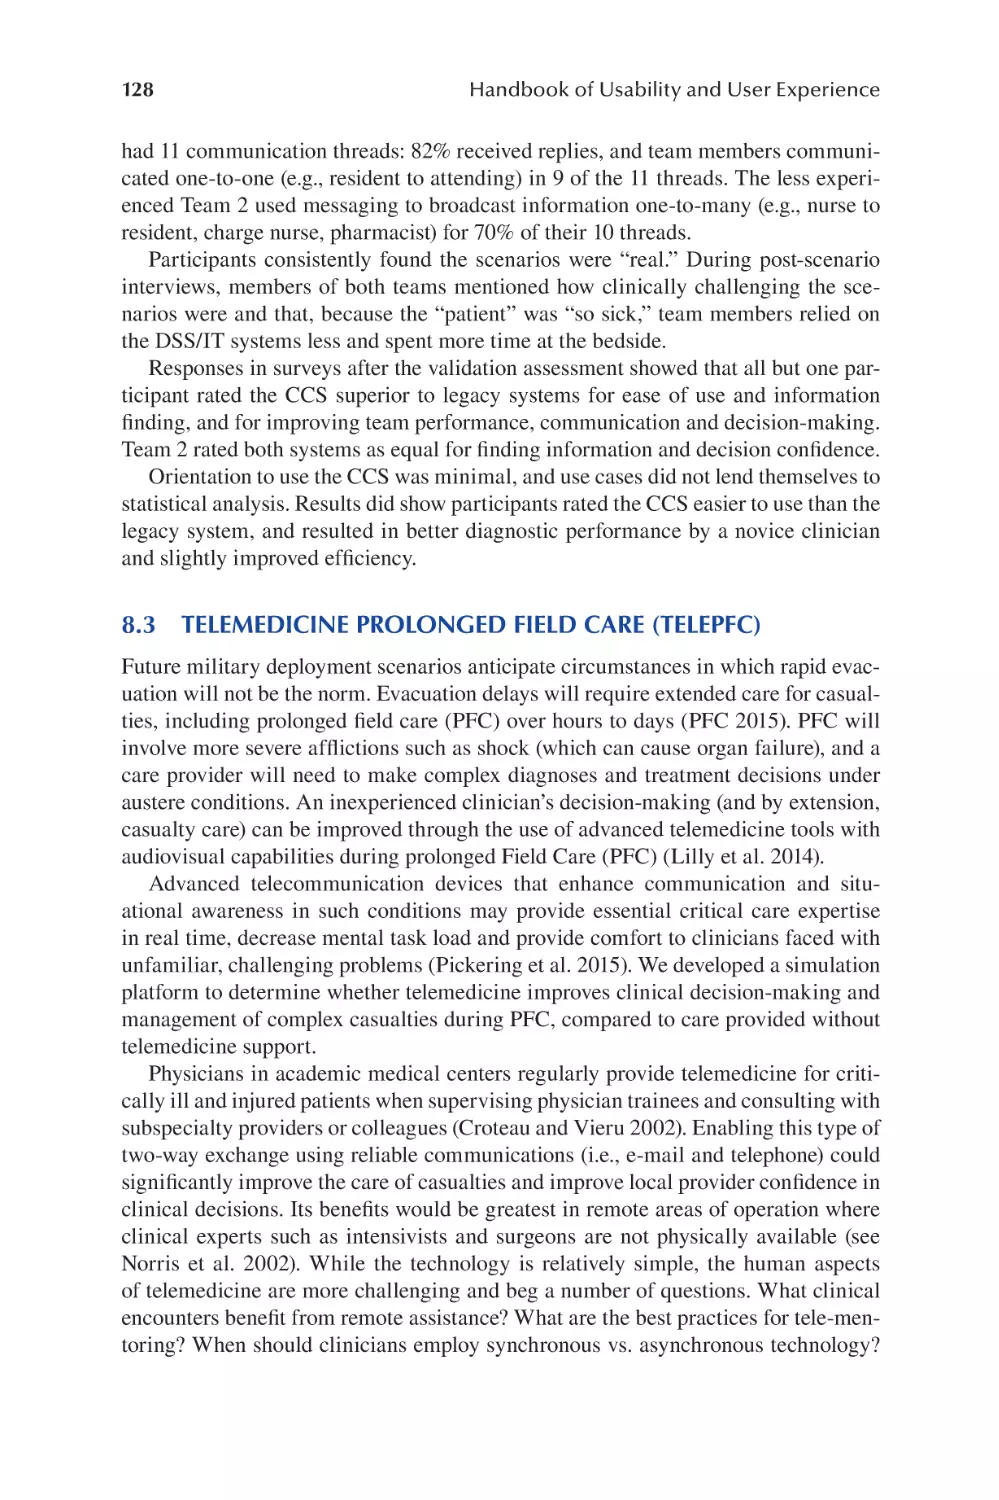 8.3 Telemedicine Prolonged Field Care (TelePFC)